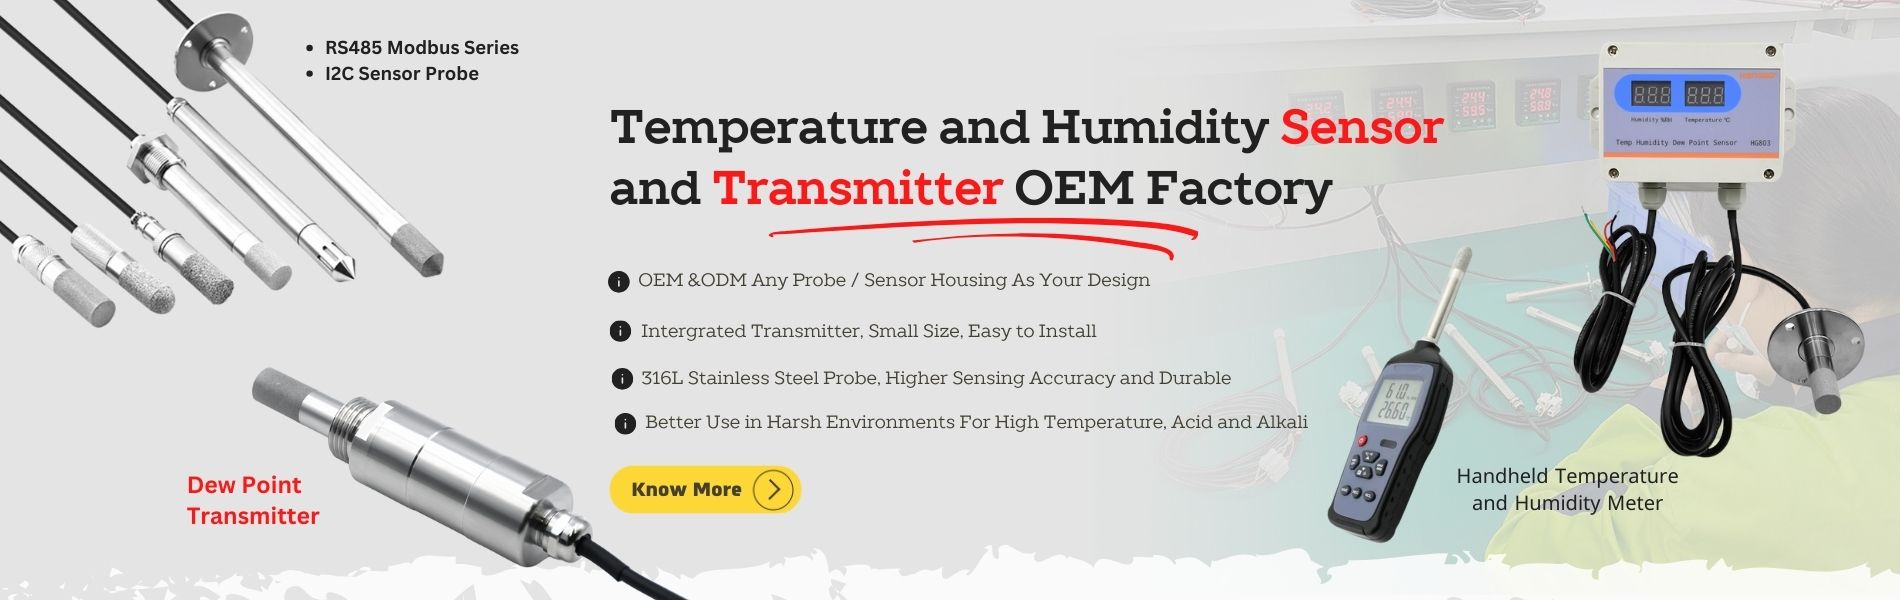 Temperature Humidity Sensor Probe and Transmitter OEM Factory